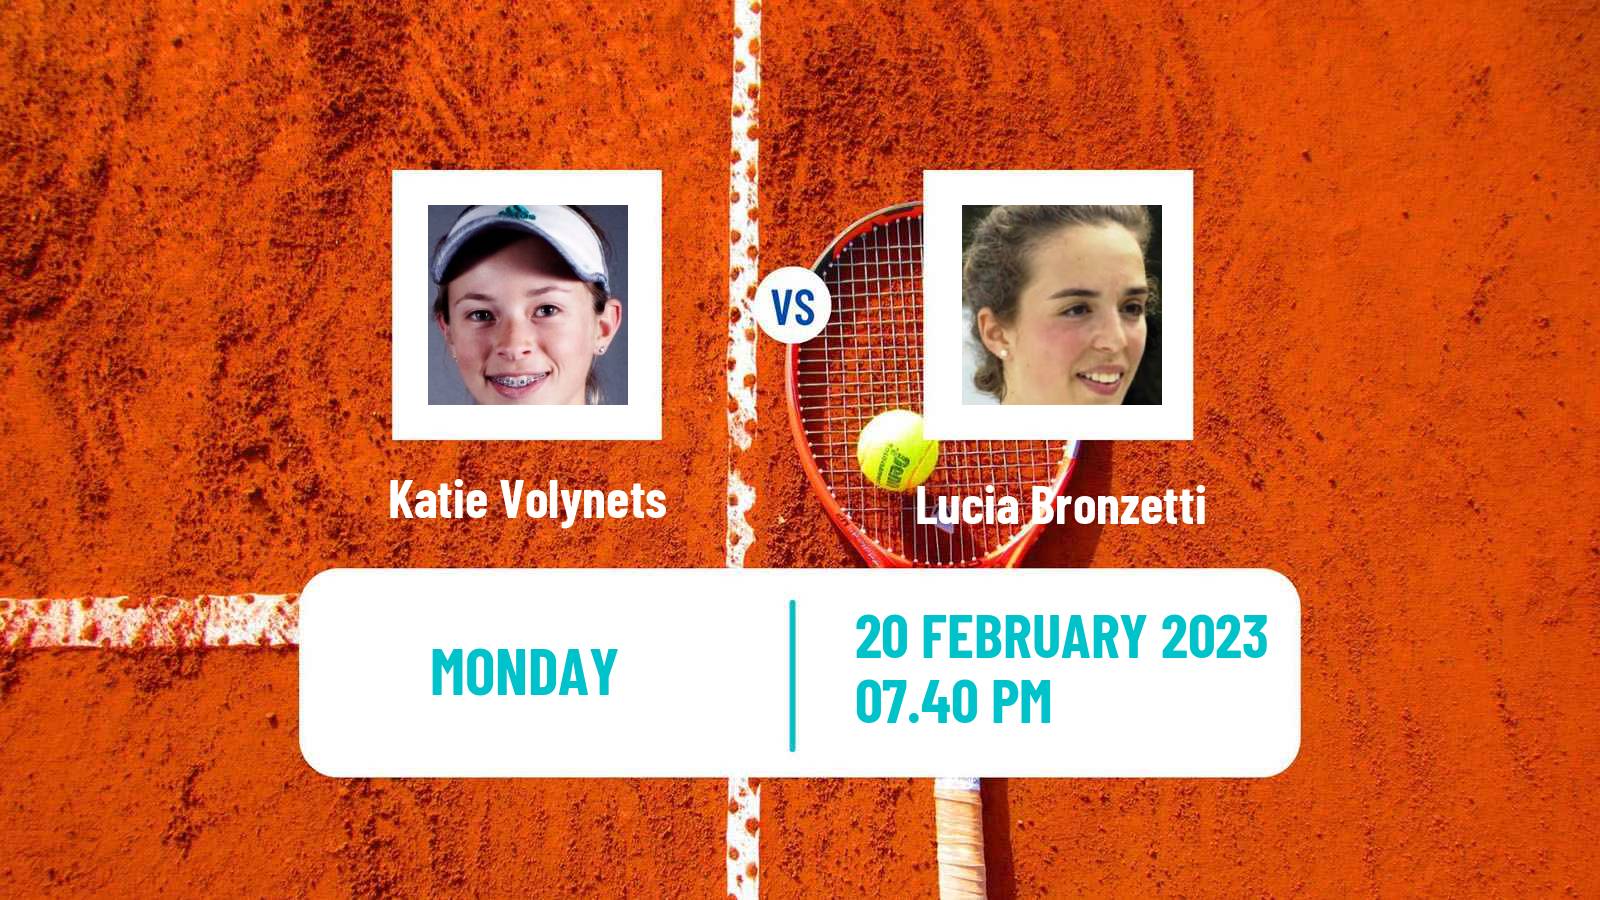 Tennis WTA Merida Katie Volynets - Lucia Bronzetti